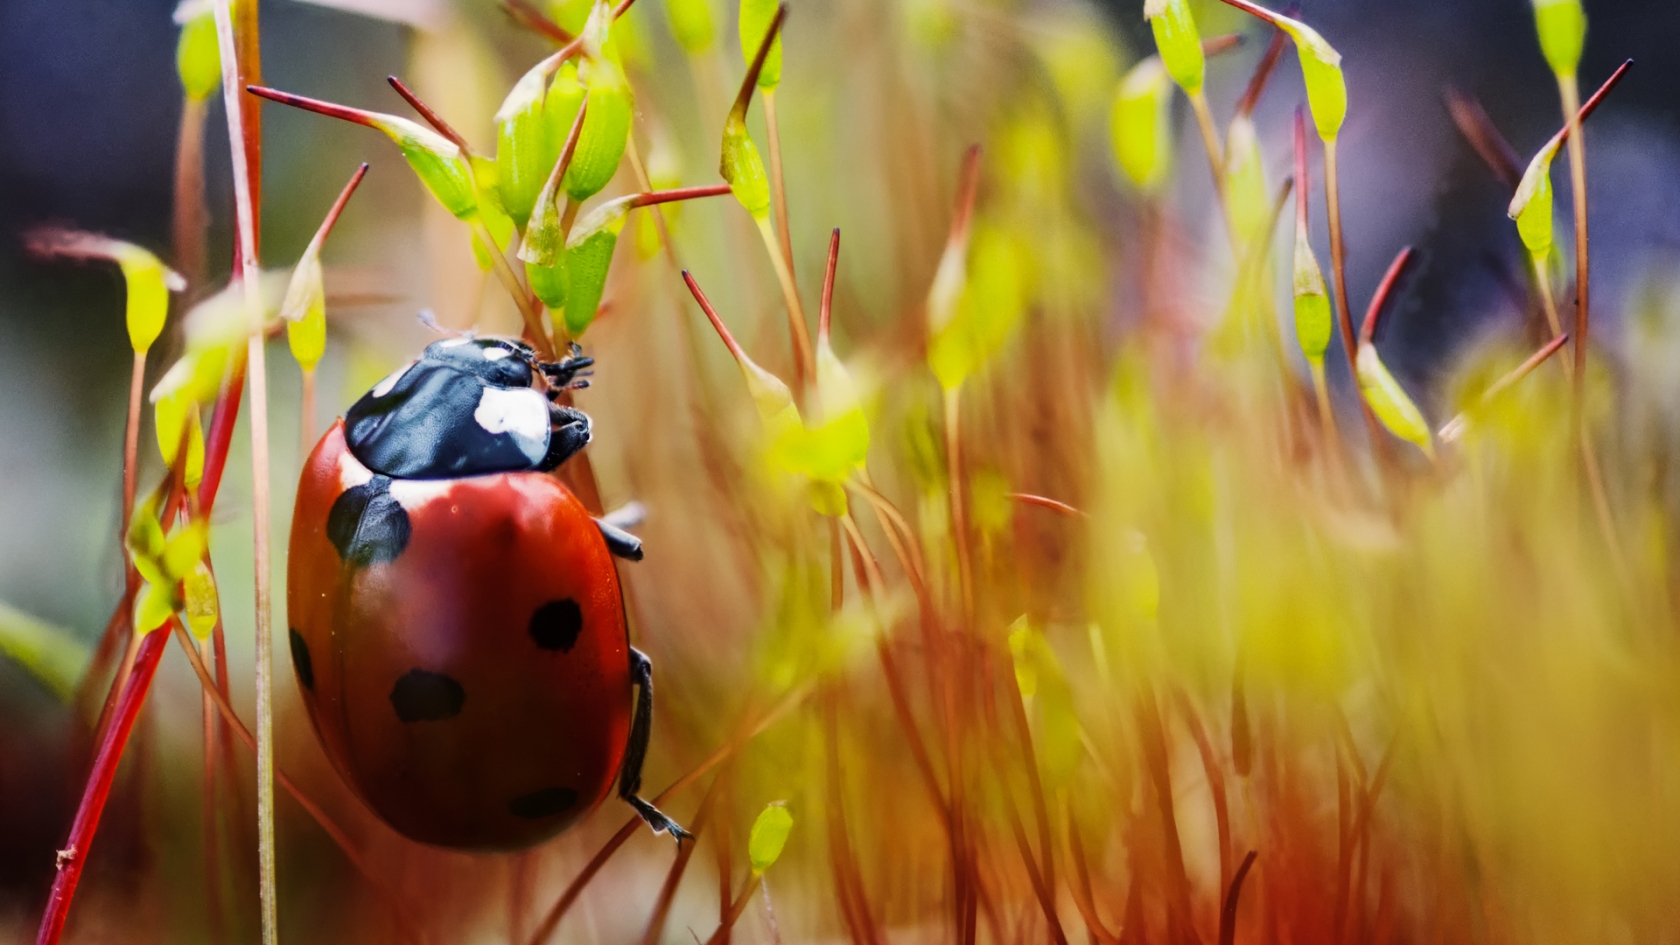 Red Ladybug Macro Photo for 1680 x 945 HDTV resolution